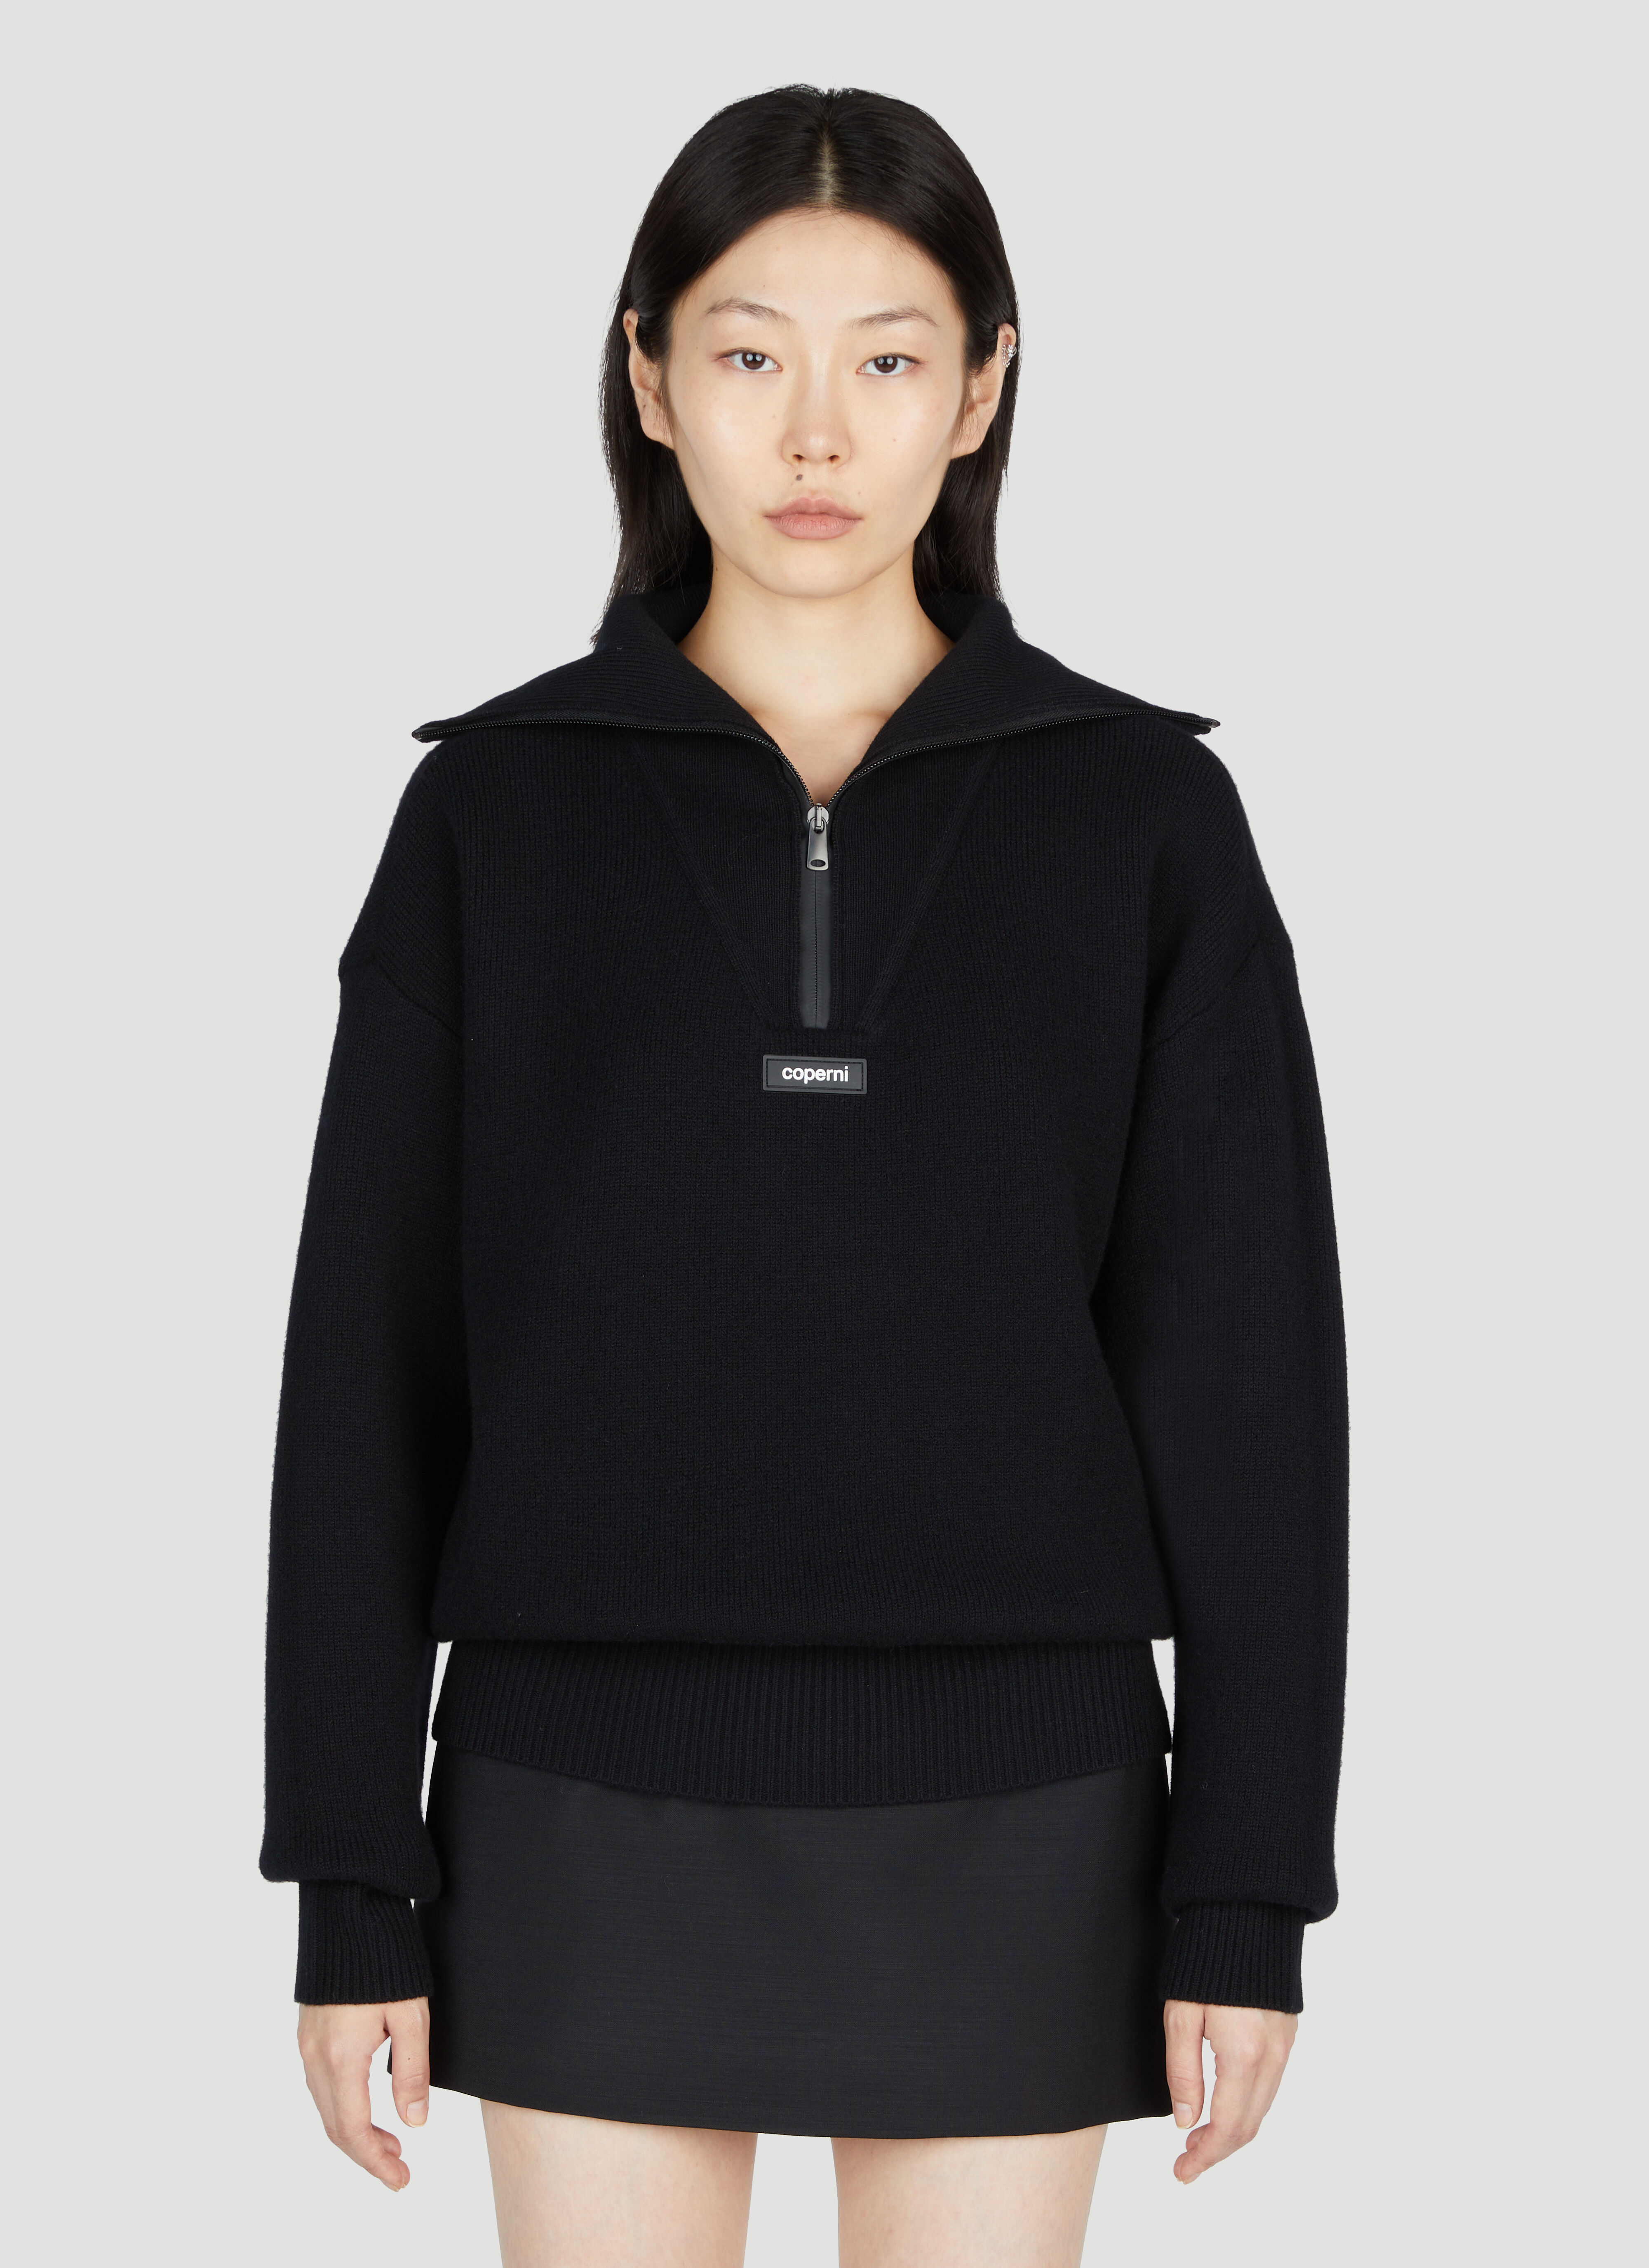 Coperni Half-Zip Boxy Sweater Black cpn0251012